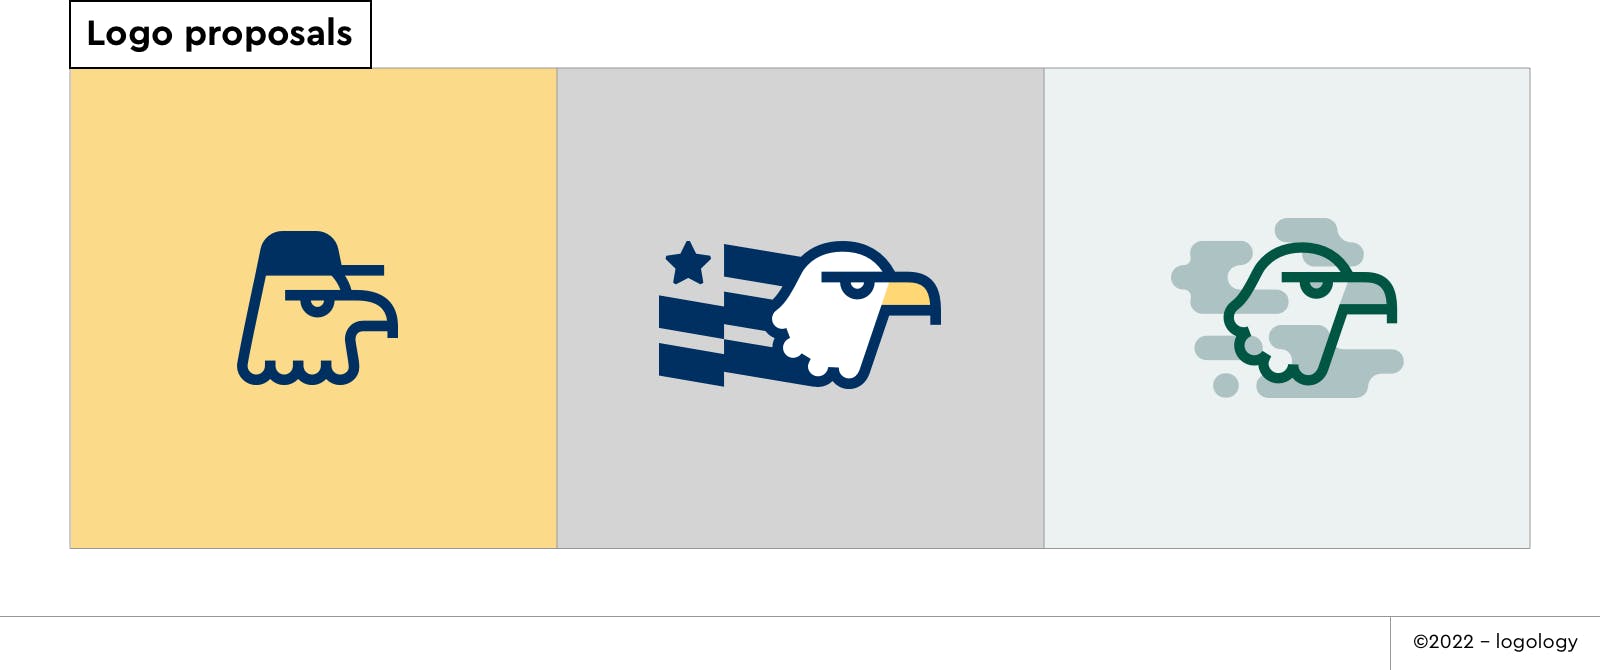 Logo proposals for a bald eagle logo